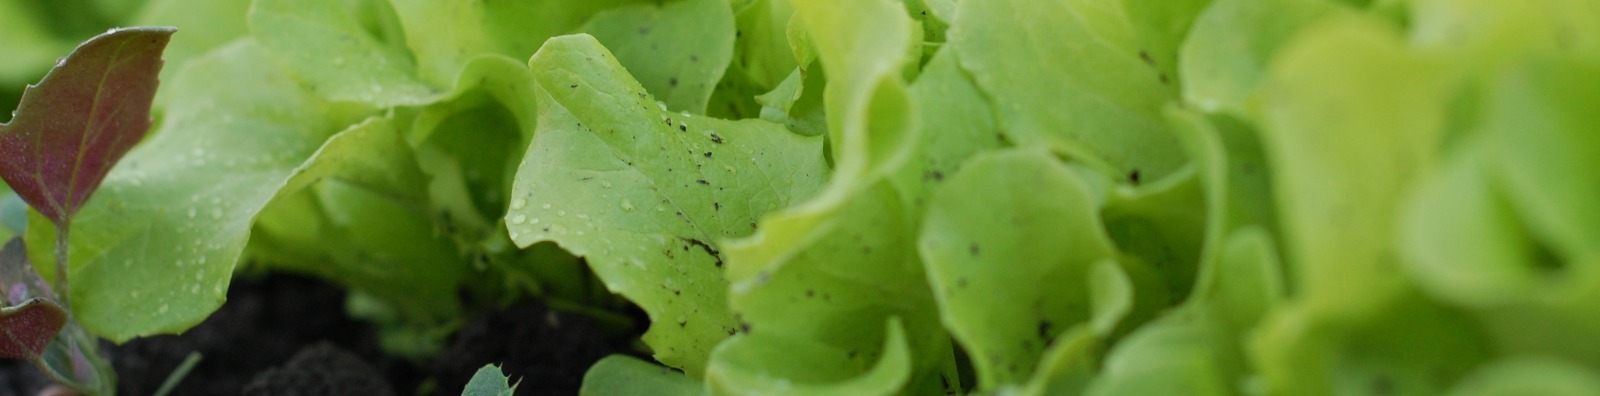 lettuce in compost